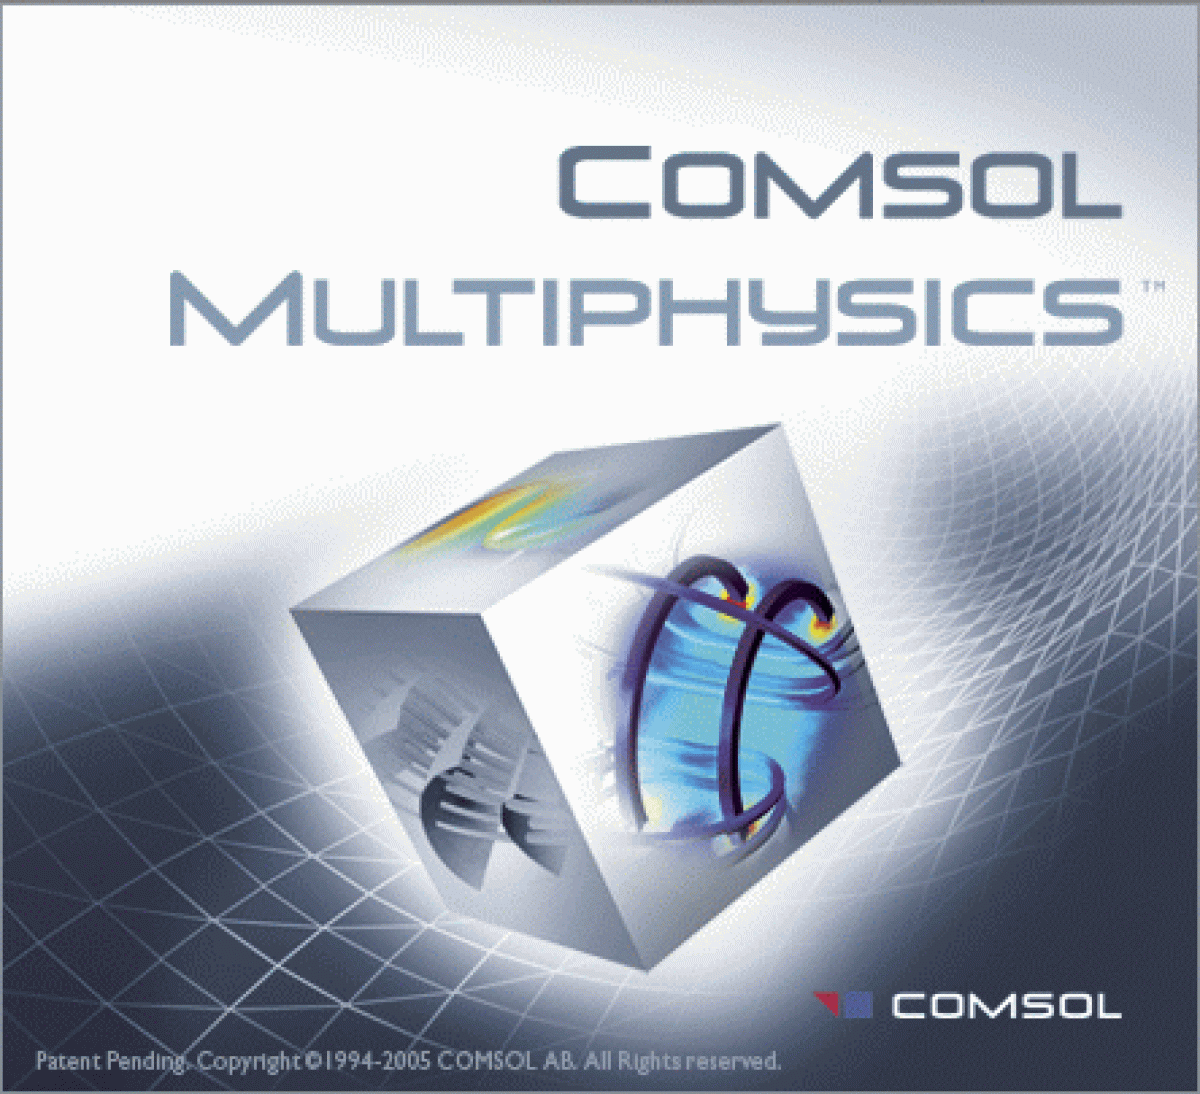 fsu comsol multiphysics download